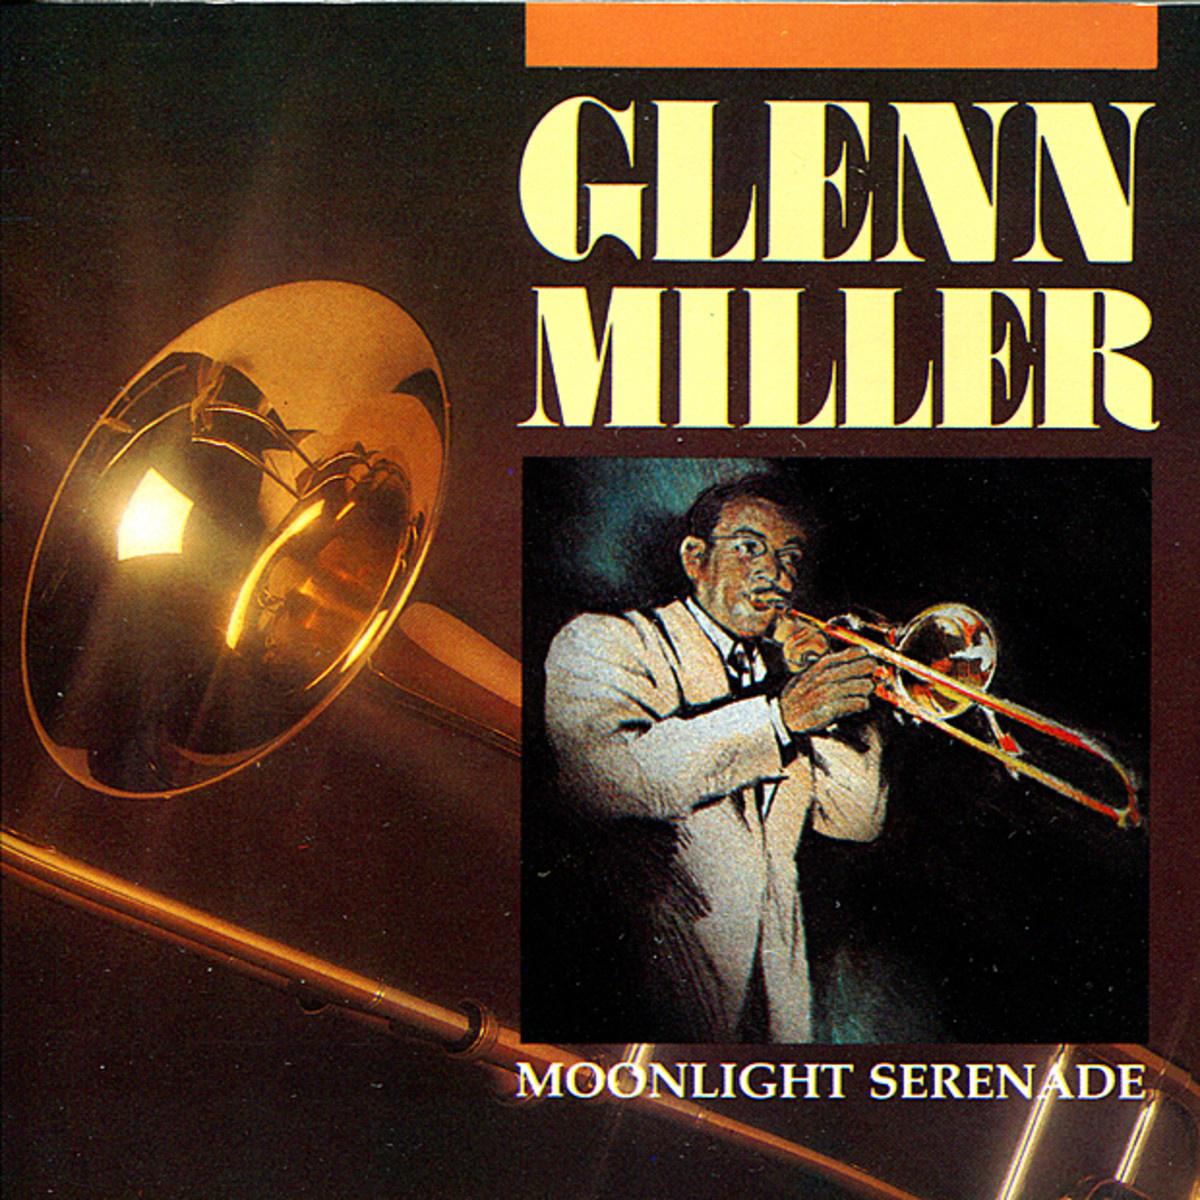 Миллер слова. Moonlight Serenade Glenn Miller. Moonlight Serenade Гленн Миллер. Гленн Миллер альбомы. Moonlight Serenade Гленн Миллер слова.